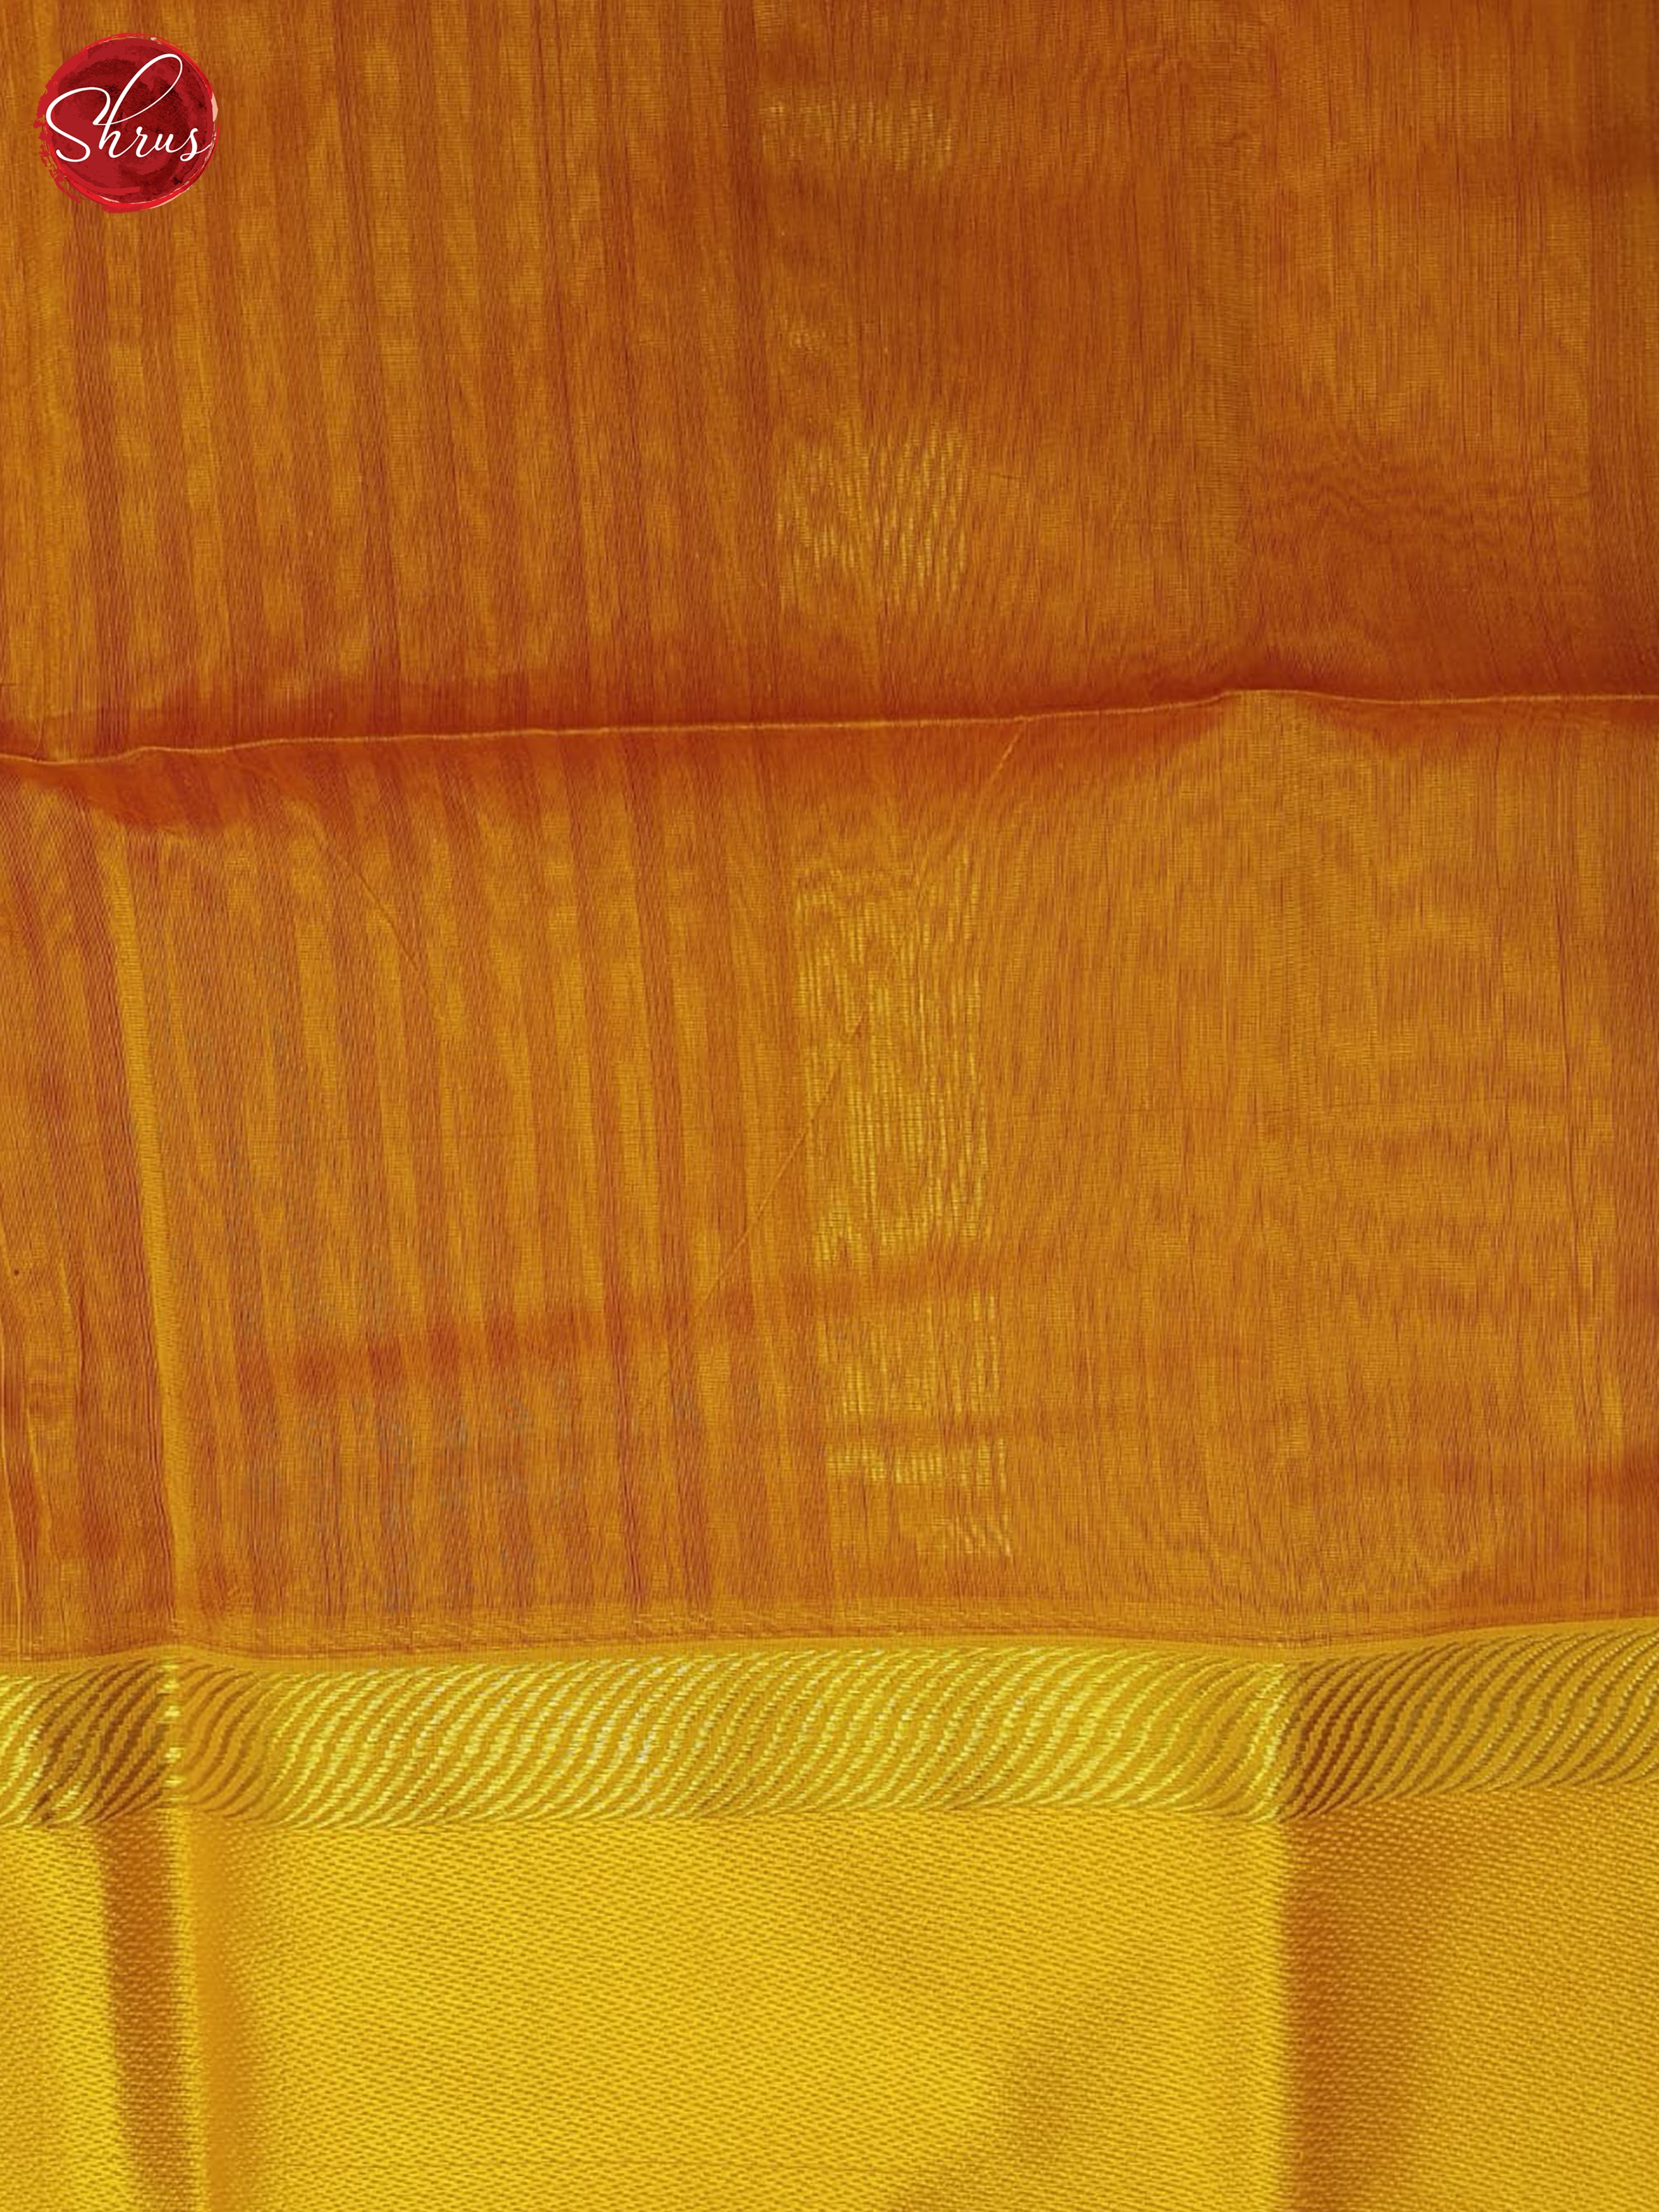 Red And Orange- Maheshwari Silk Cotton Saree - Shop on ShrusEternity.com